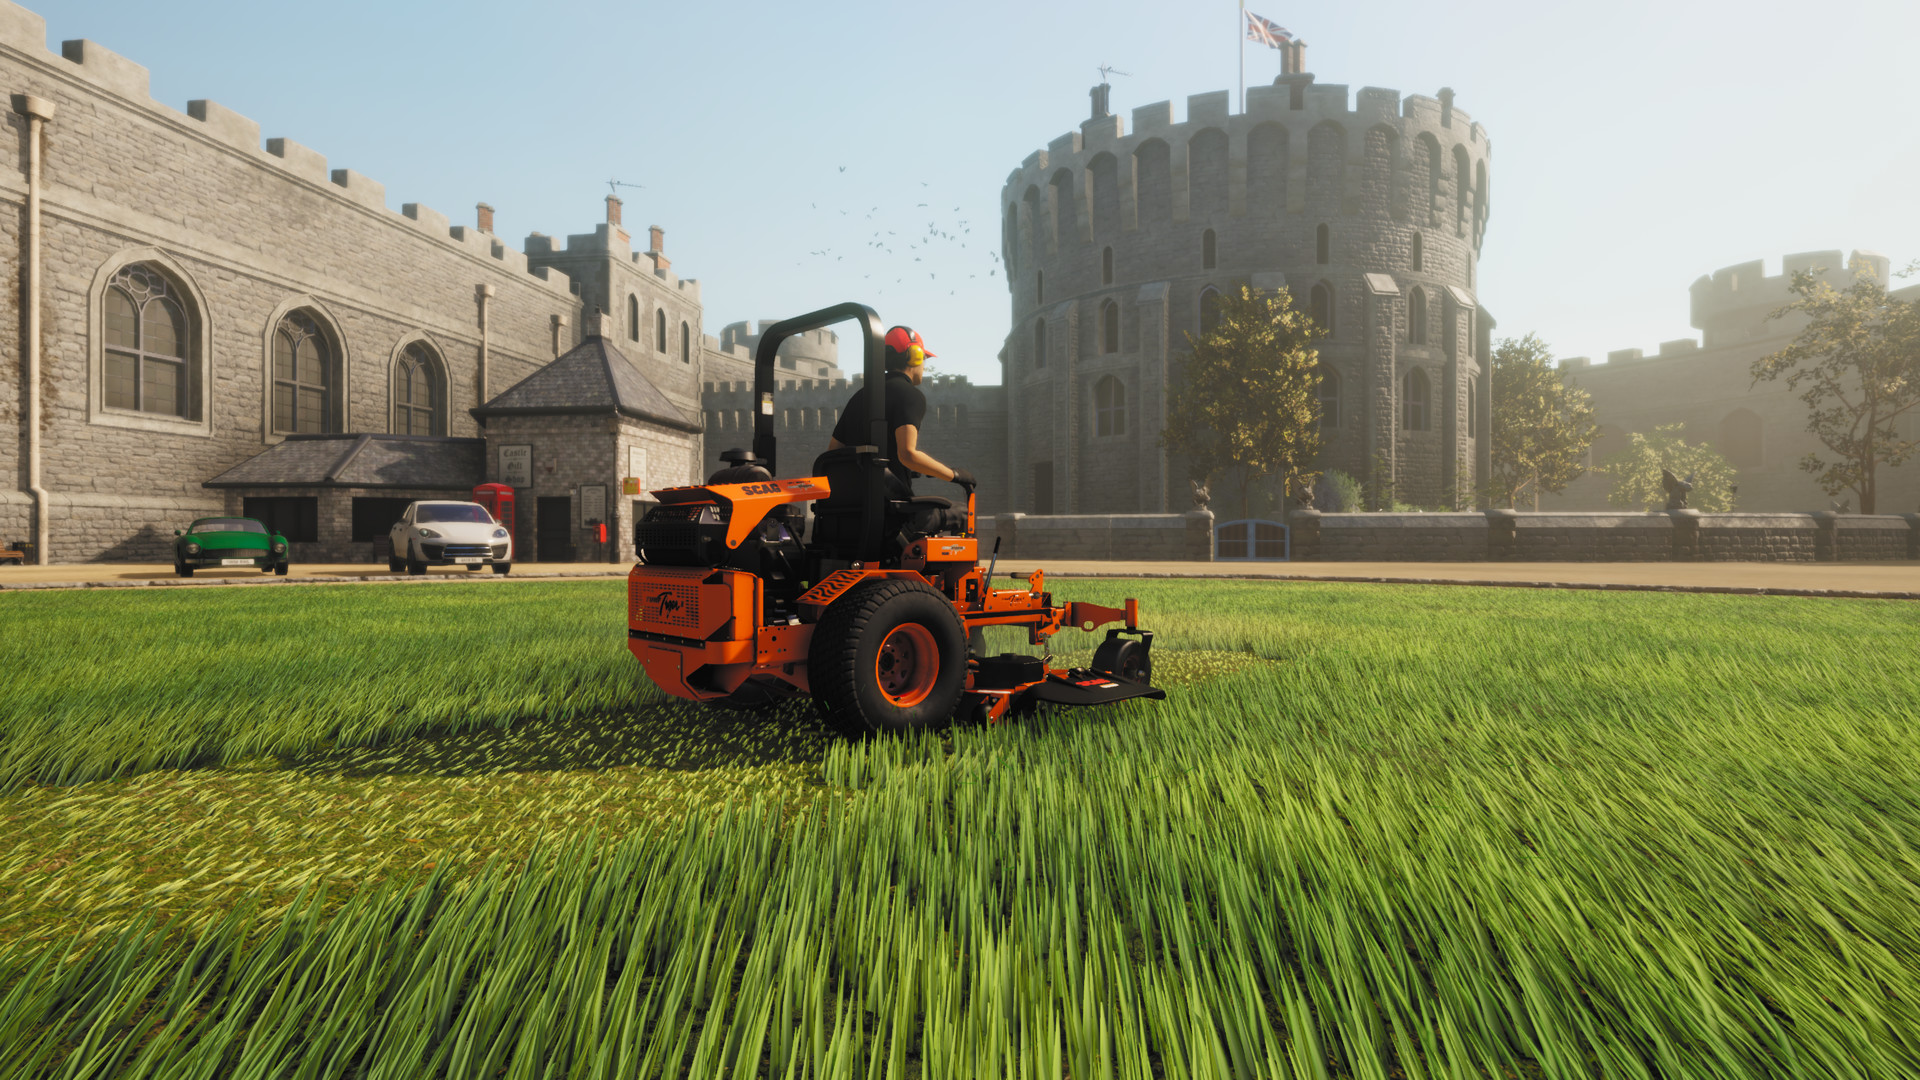 Lawn Mowing Simulator добавят в Game Pass уже на следующей неделе